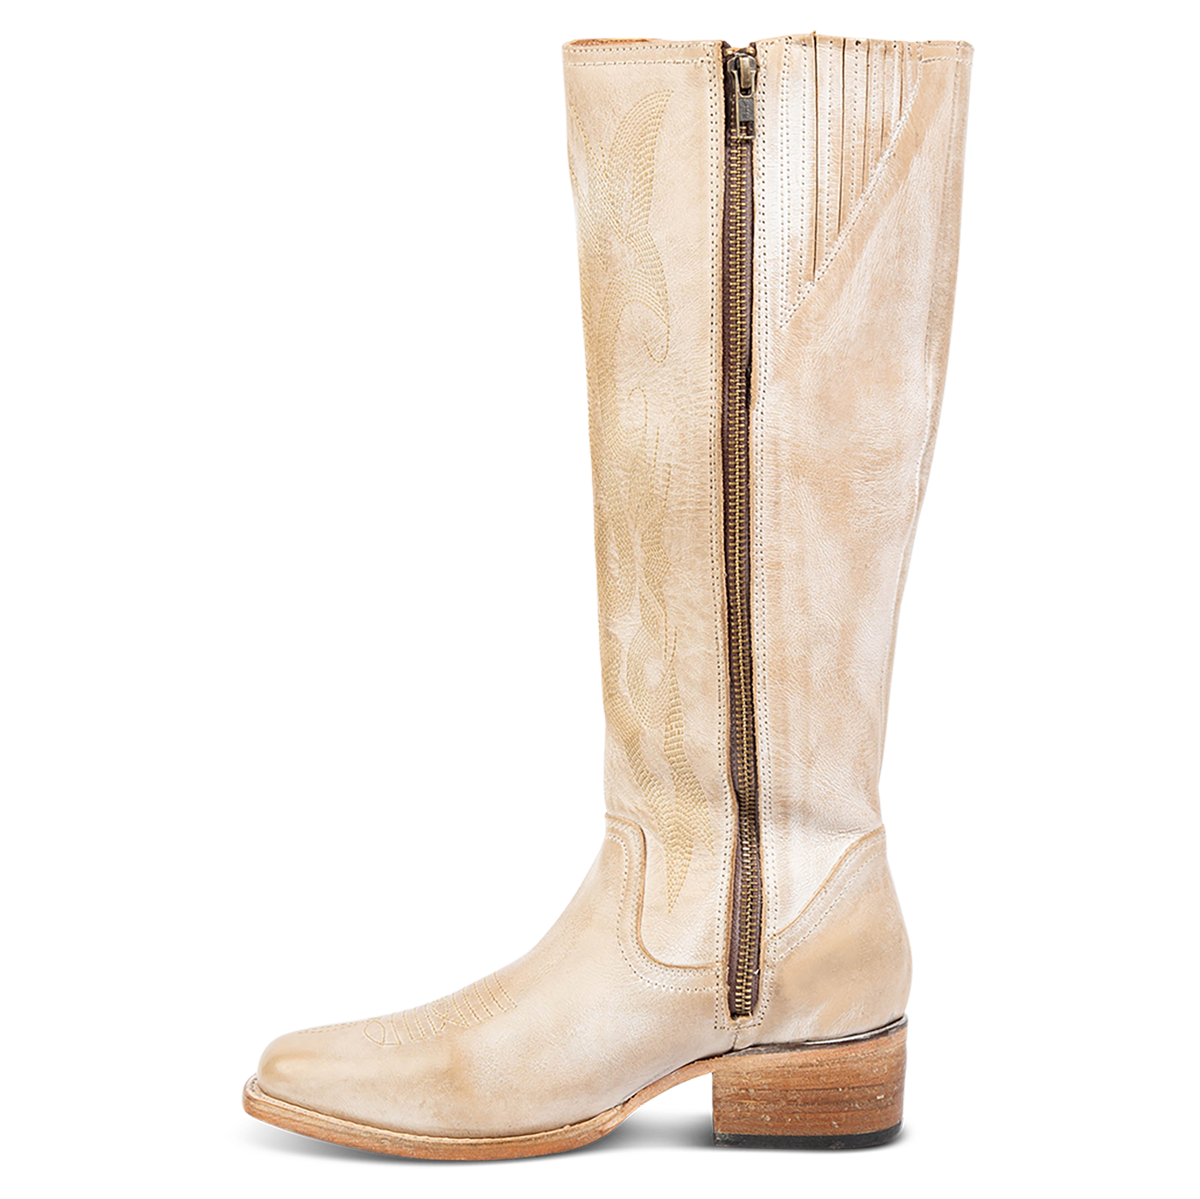 Inside view showing a low block heel, inside working brass zipper, and gore detailing on FREEBIRD women's Montana beige leather boot